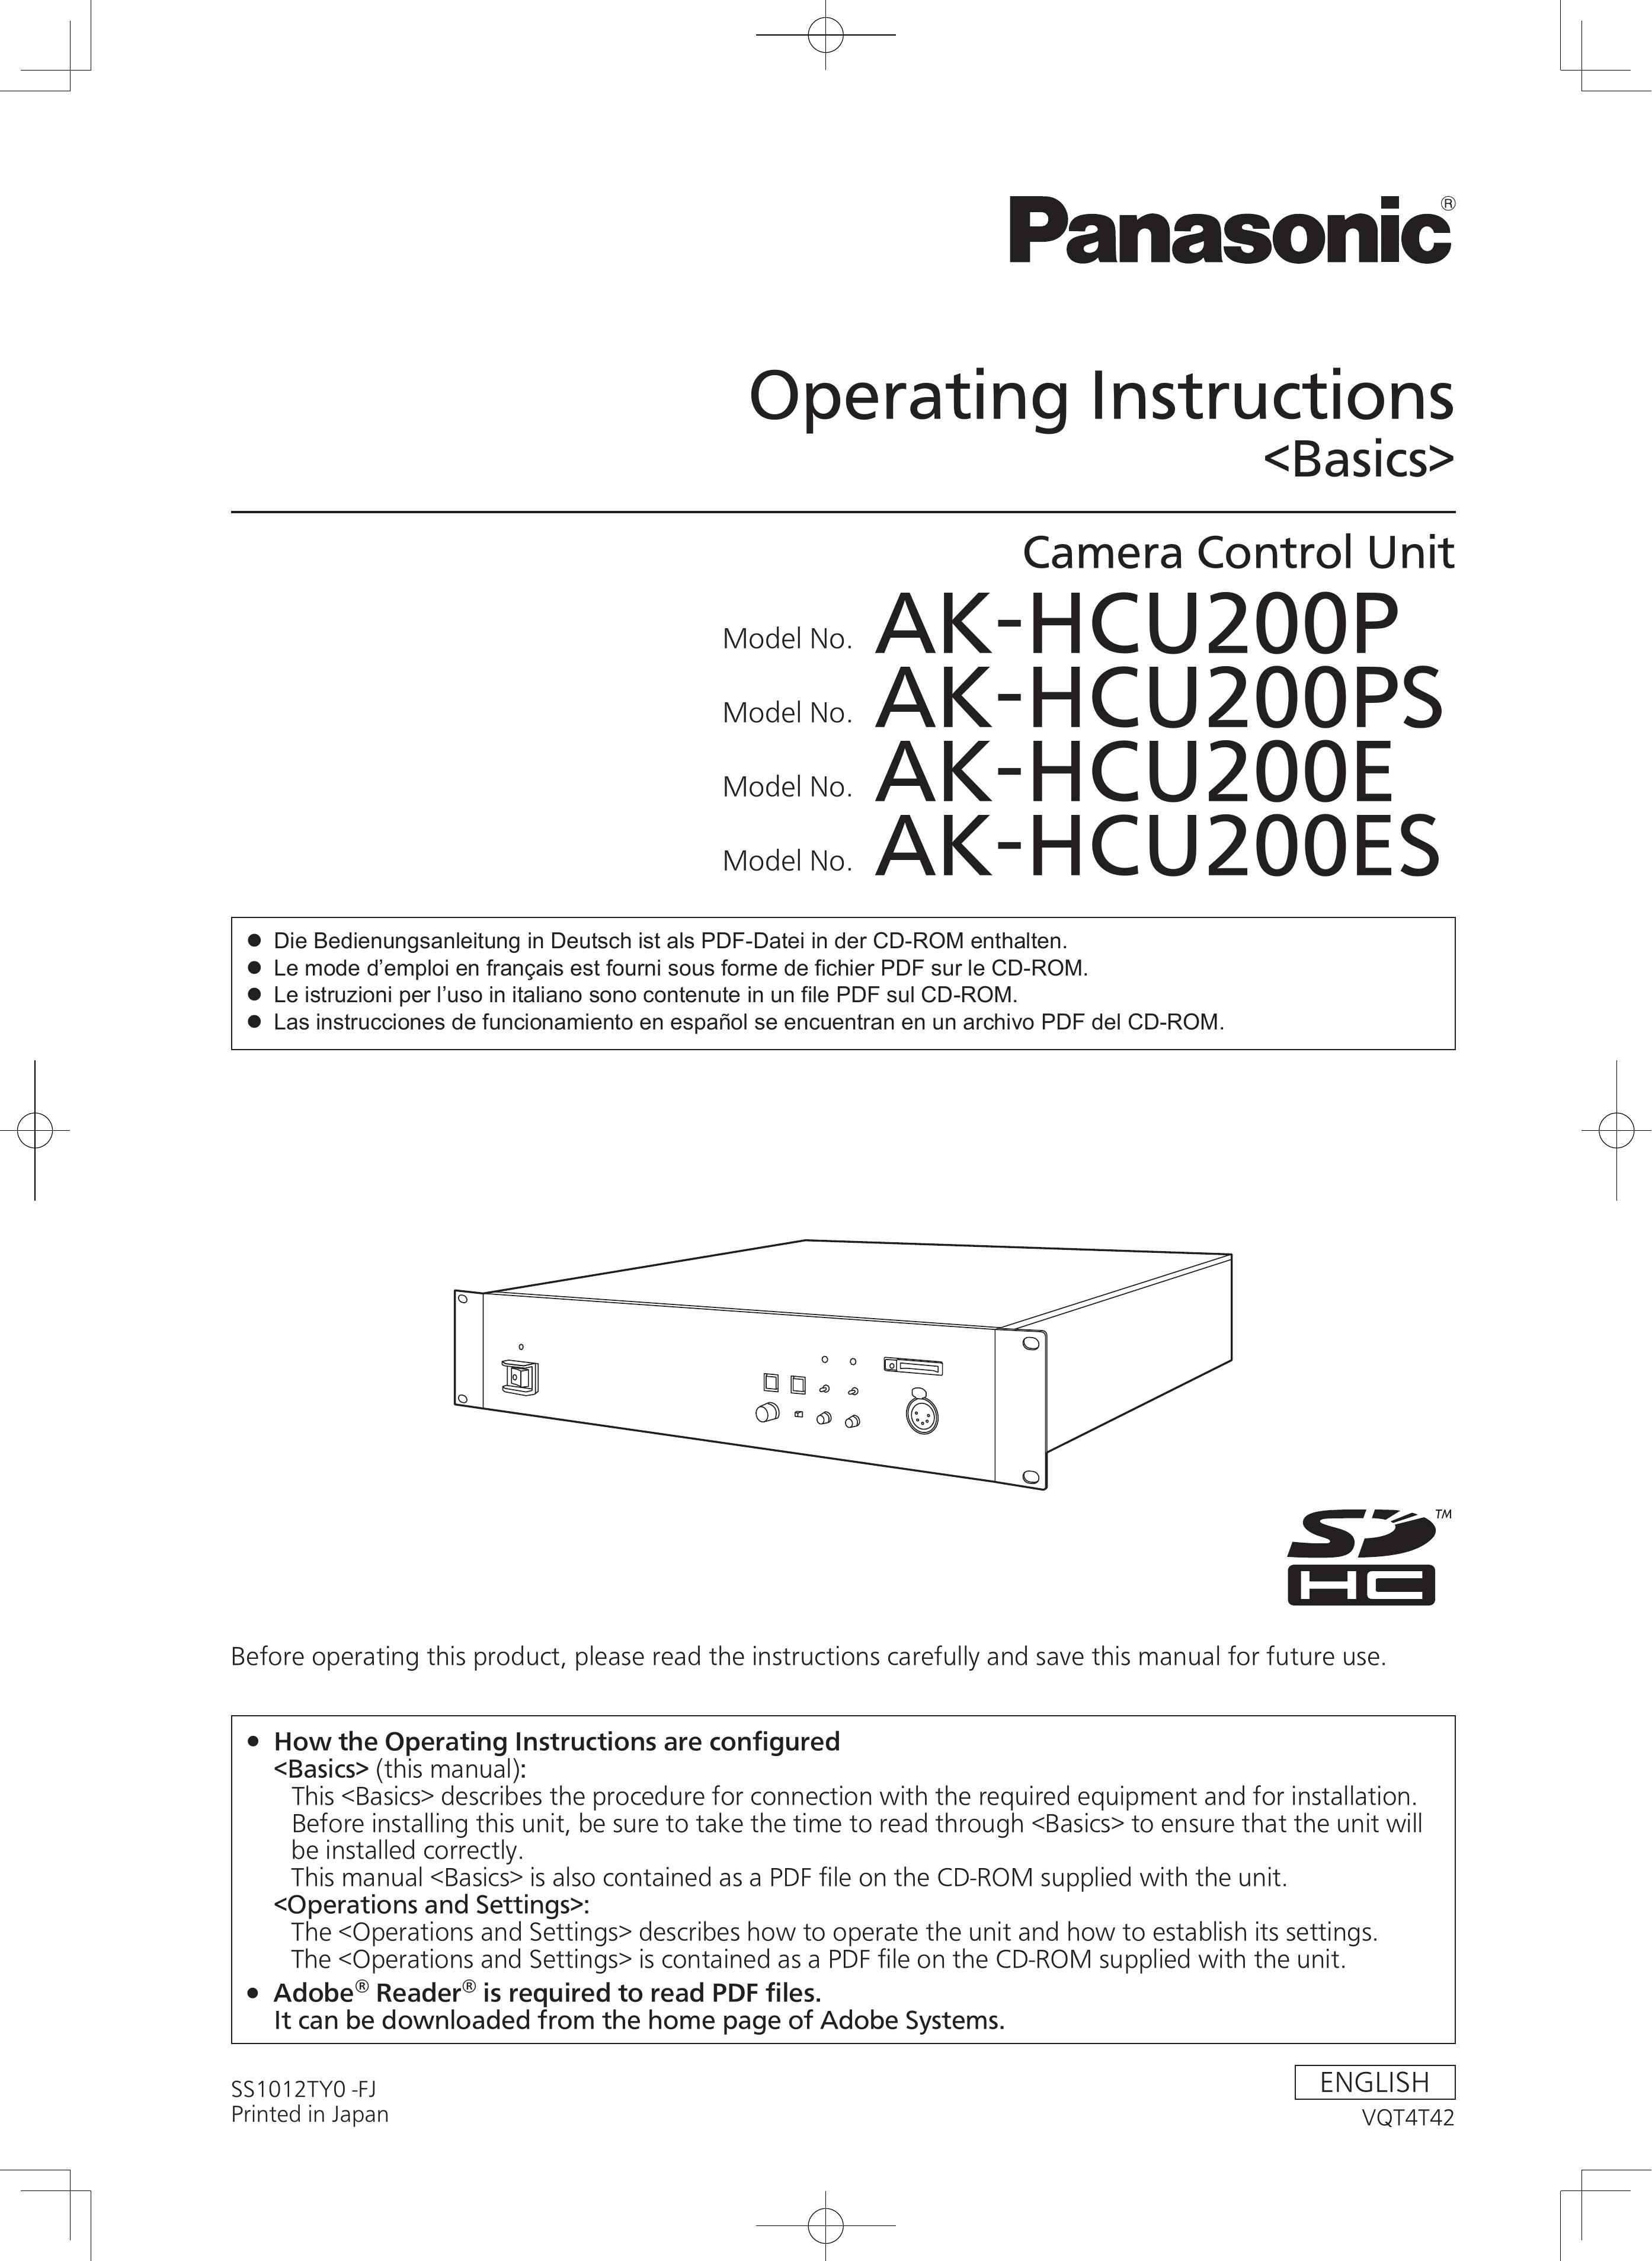 Panasonic AK-HCU200P Camera Accessories User Manual